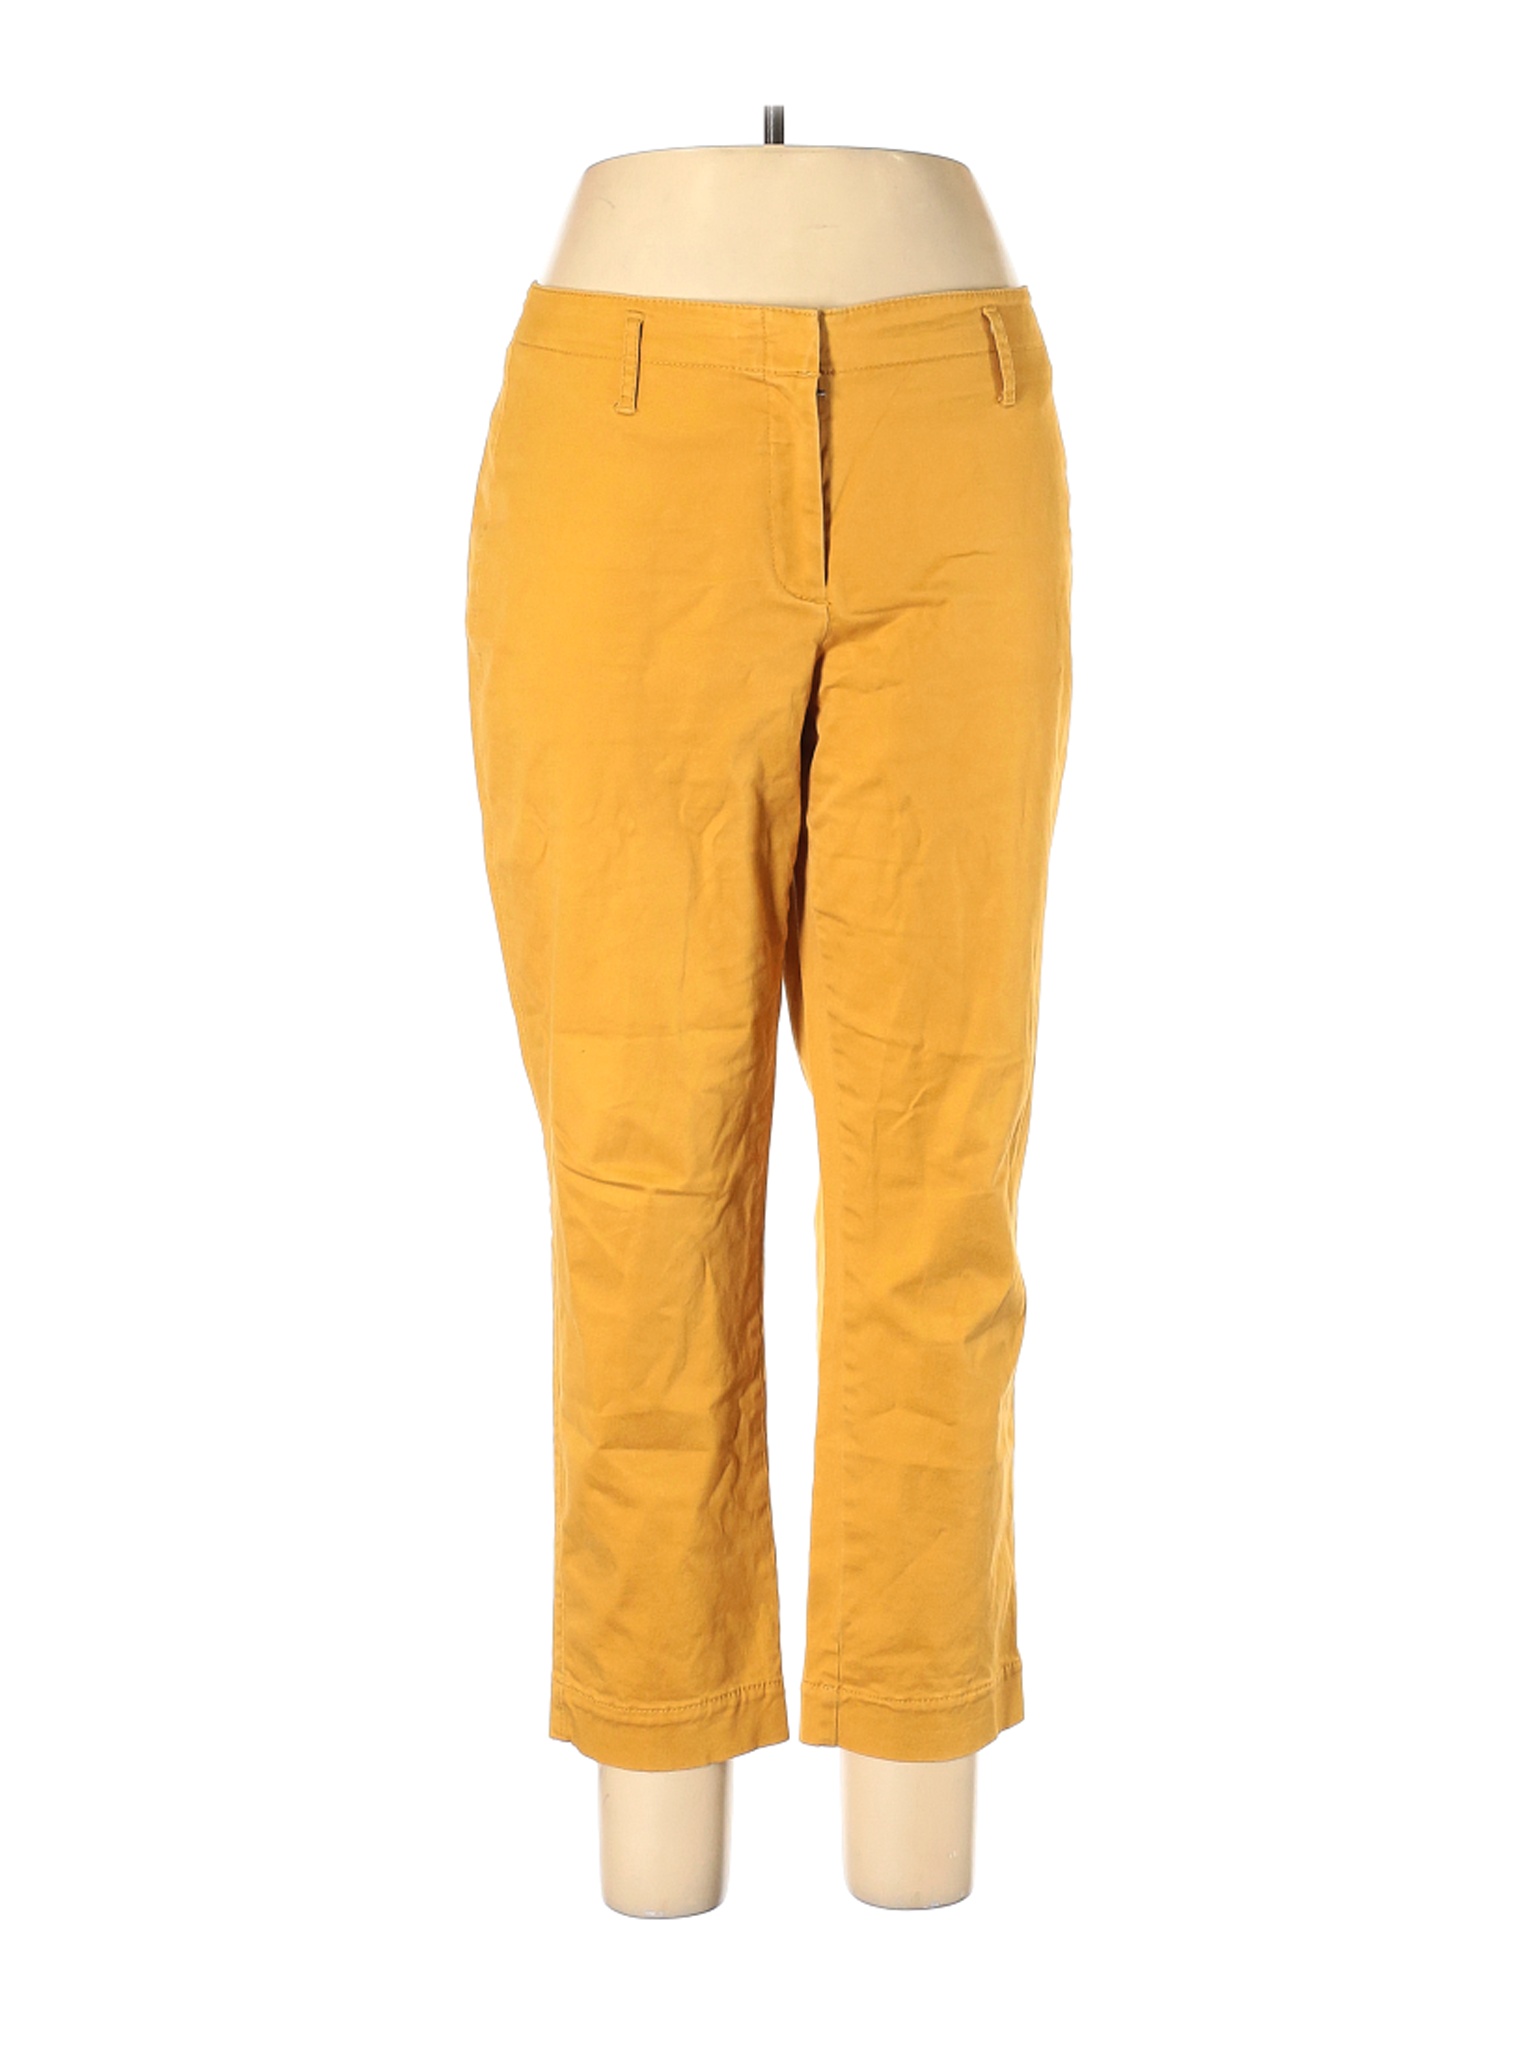 Lands' End Women Yellow Khakis 16 Petites | eBay